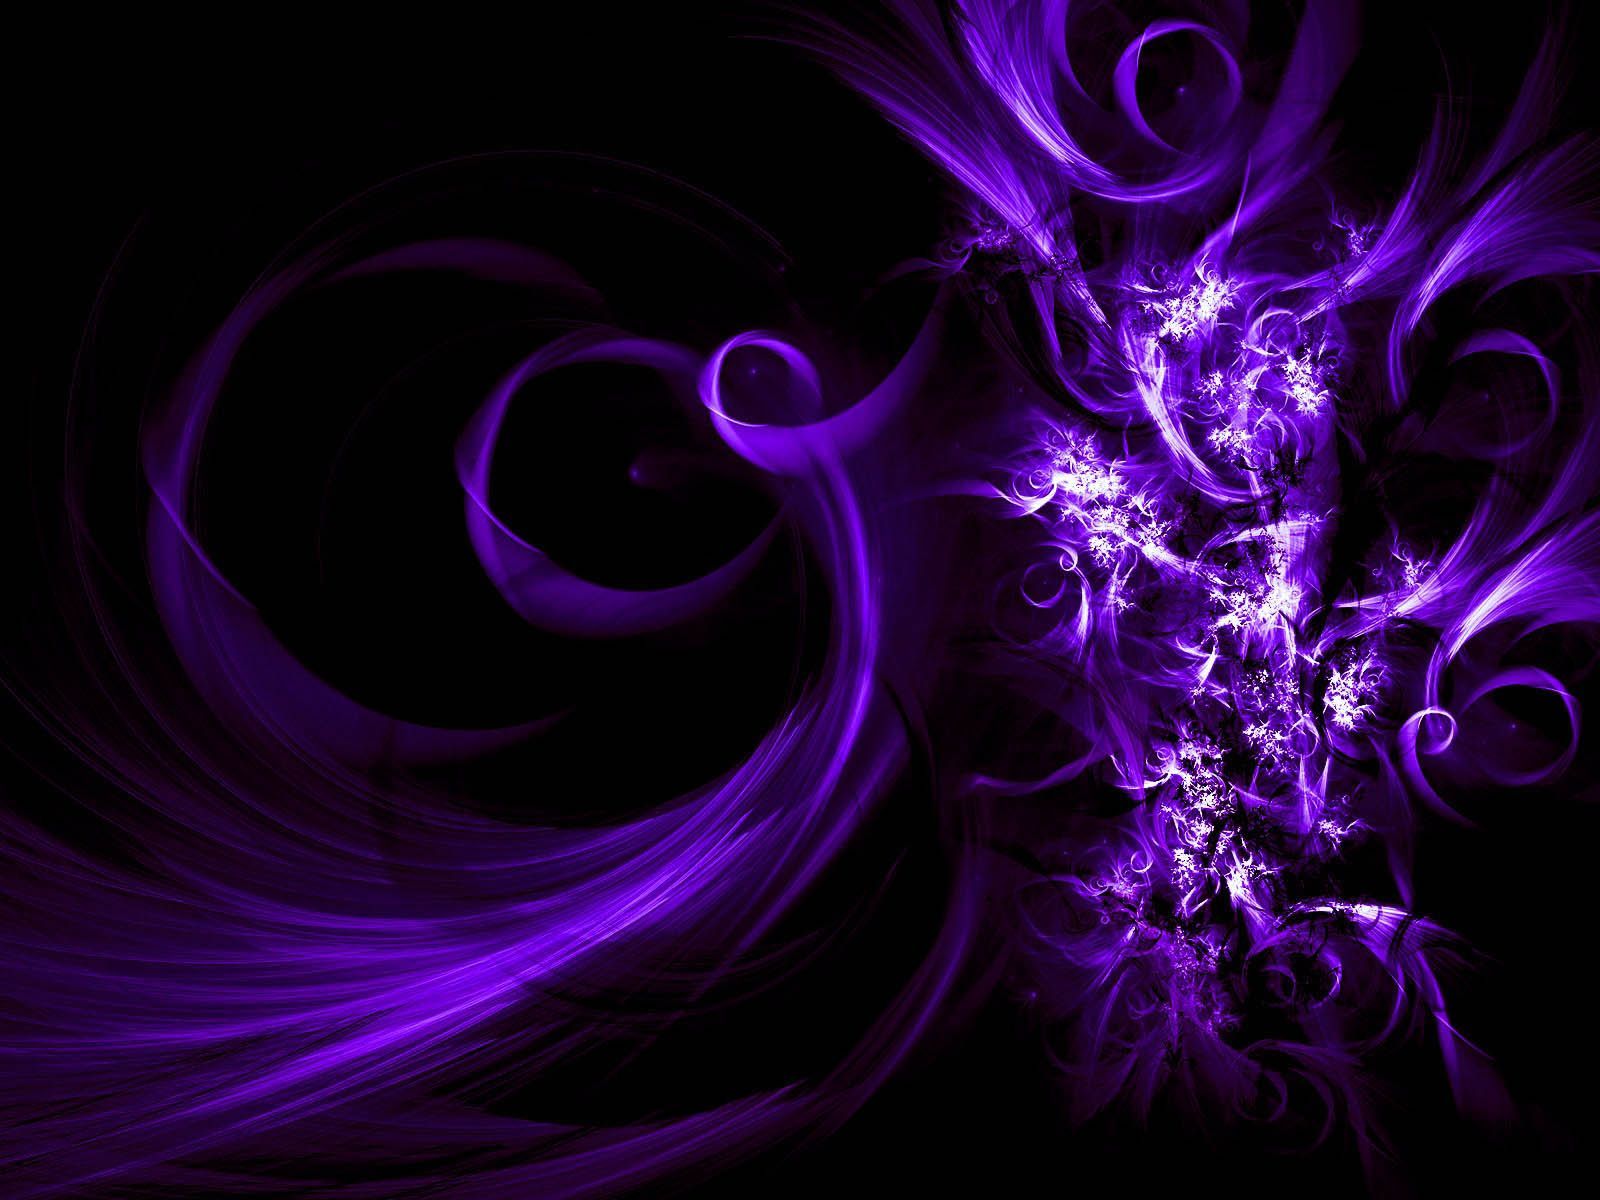 Dark Purple And Black Wallpapers